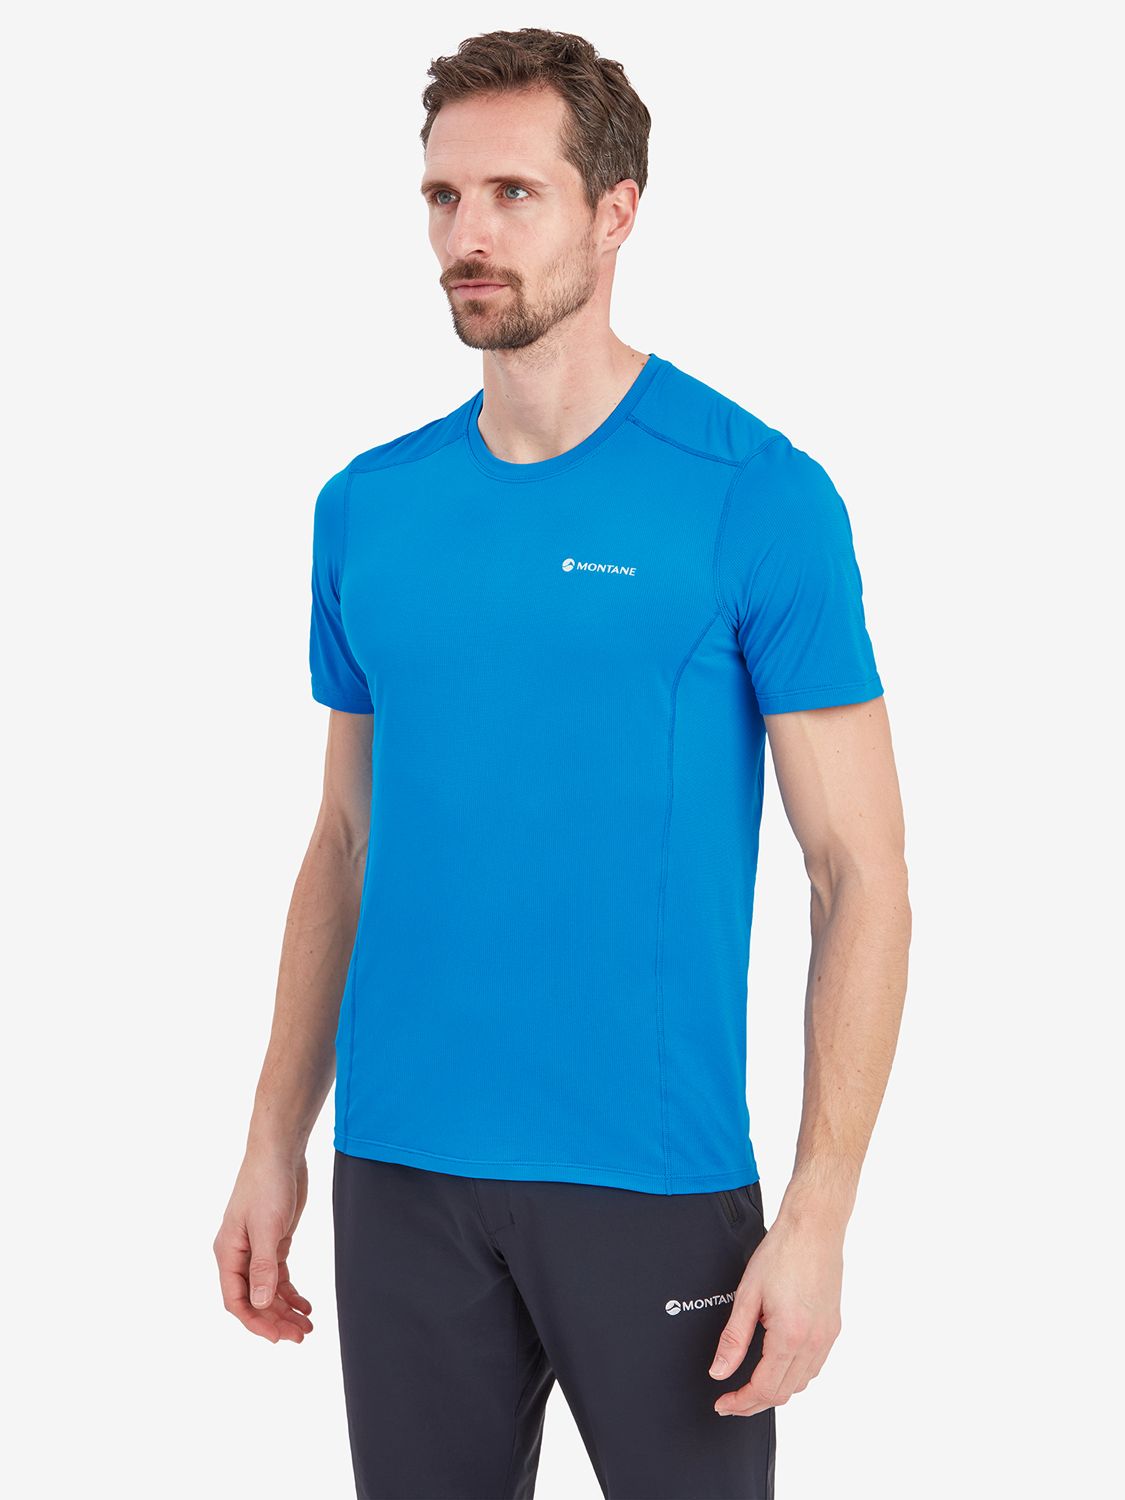 Montane Dart Lite Recycled T-Shirt Baselayer, Electric Blue, XS